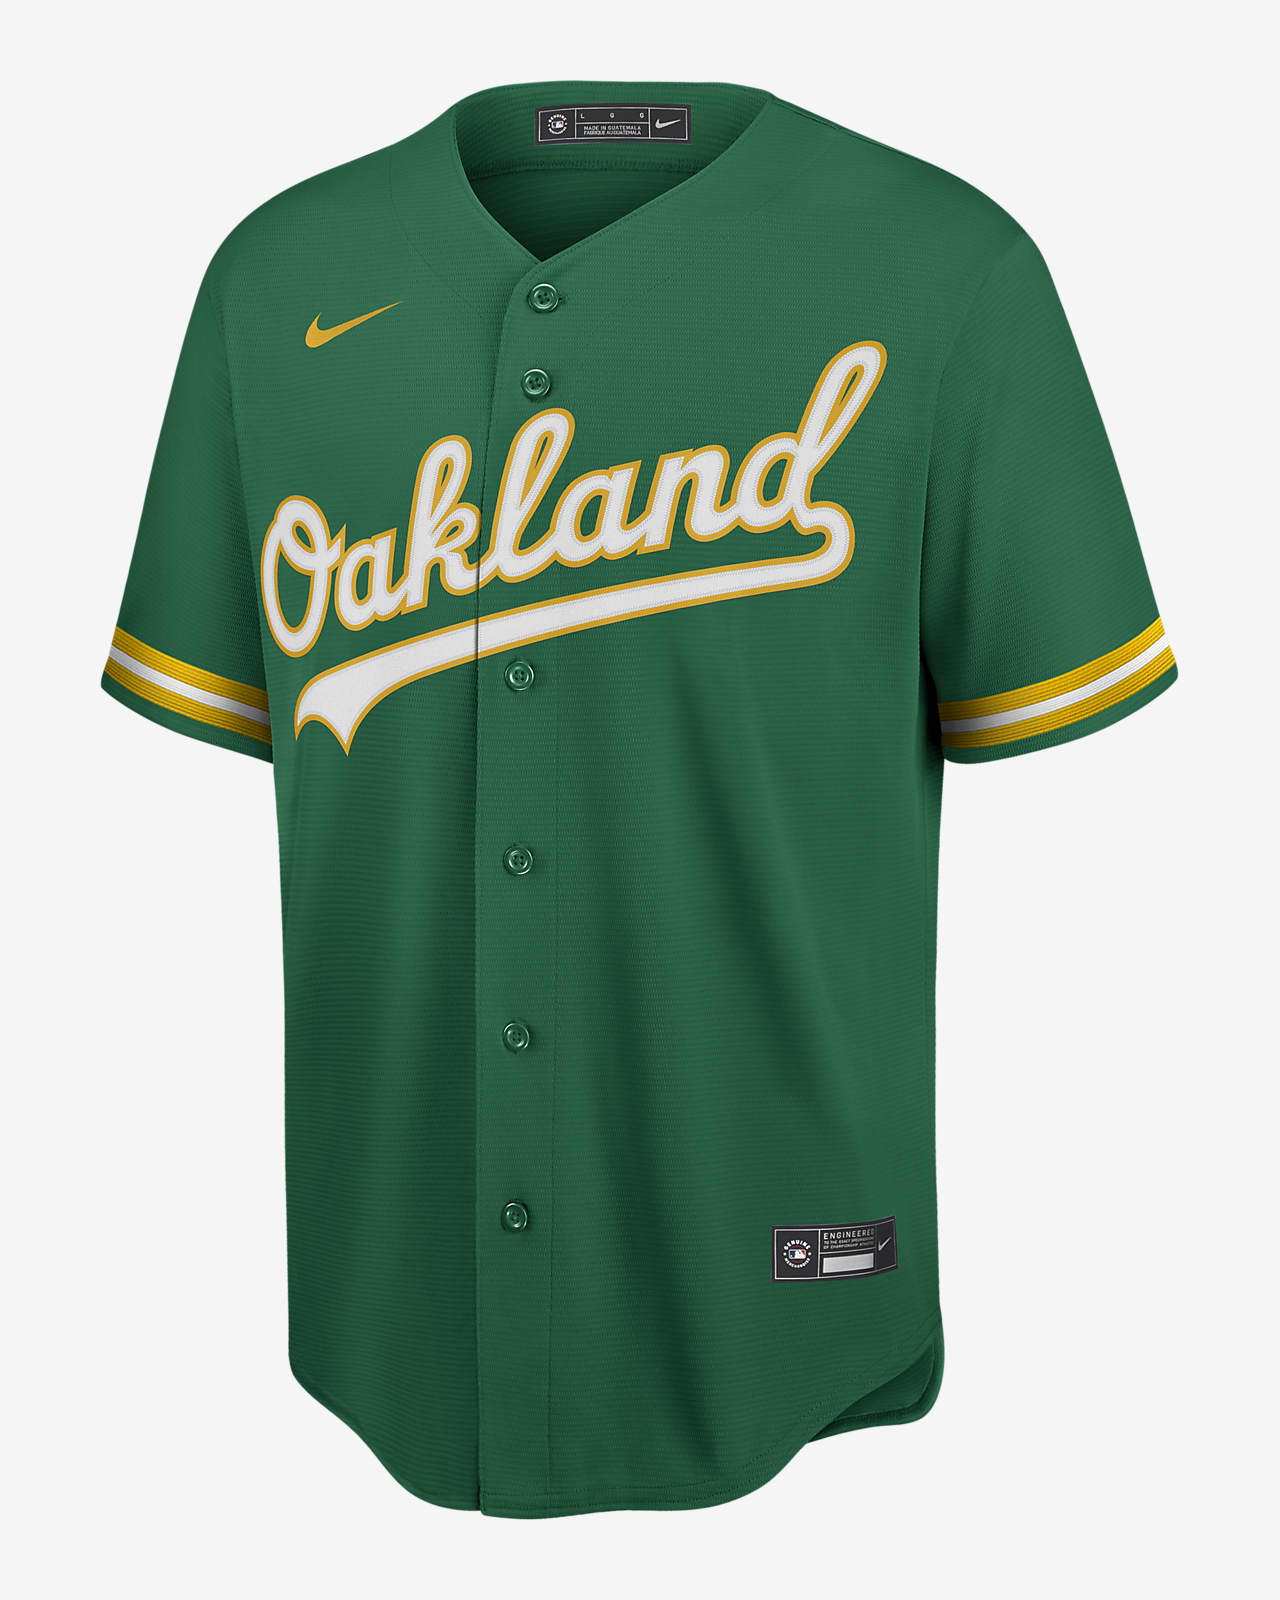 Oakland Athletics MLB Fan Jerseys for sale